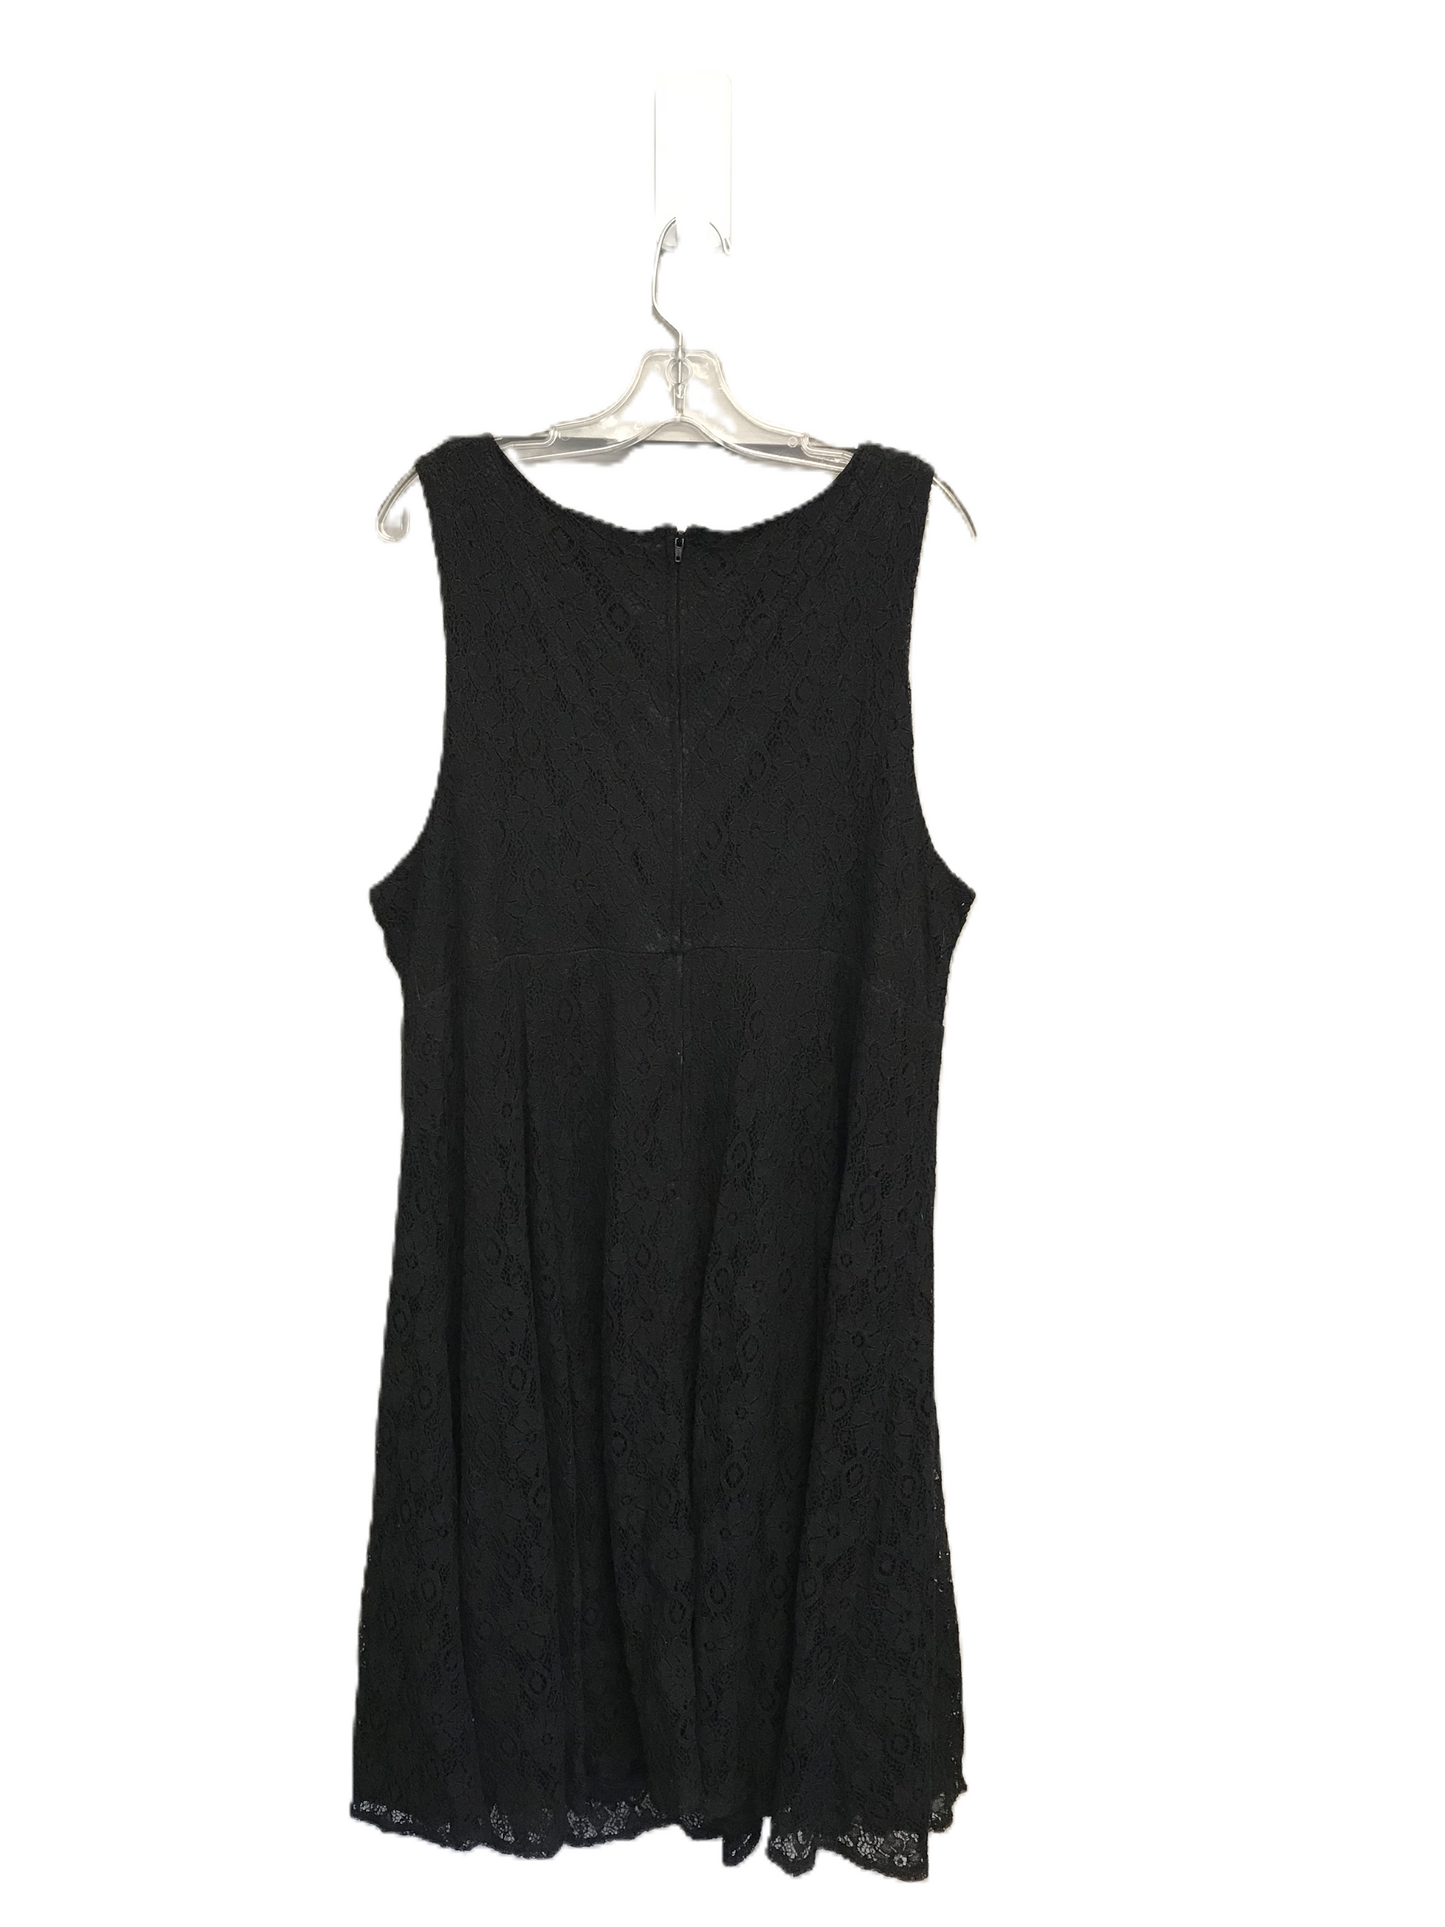 Black Dress Party Short By Torrid, Size: 3x